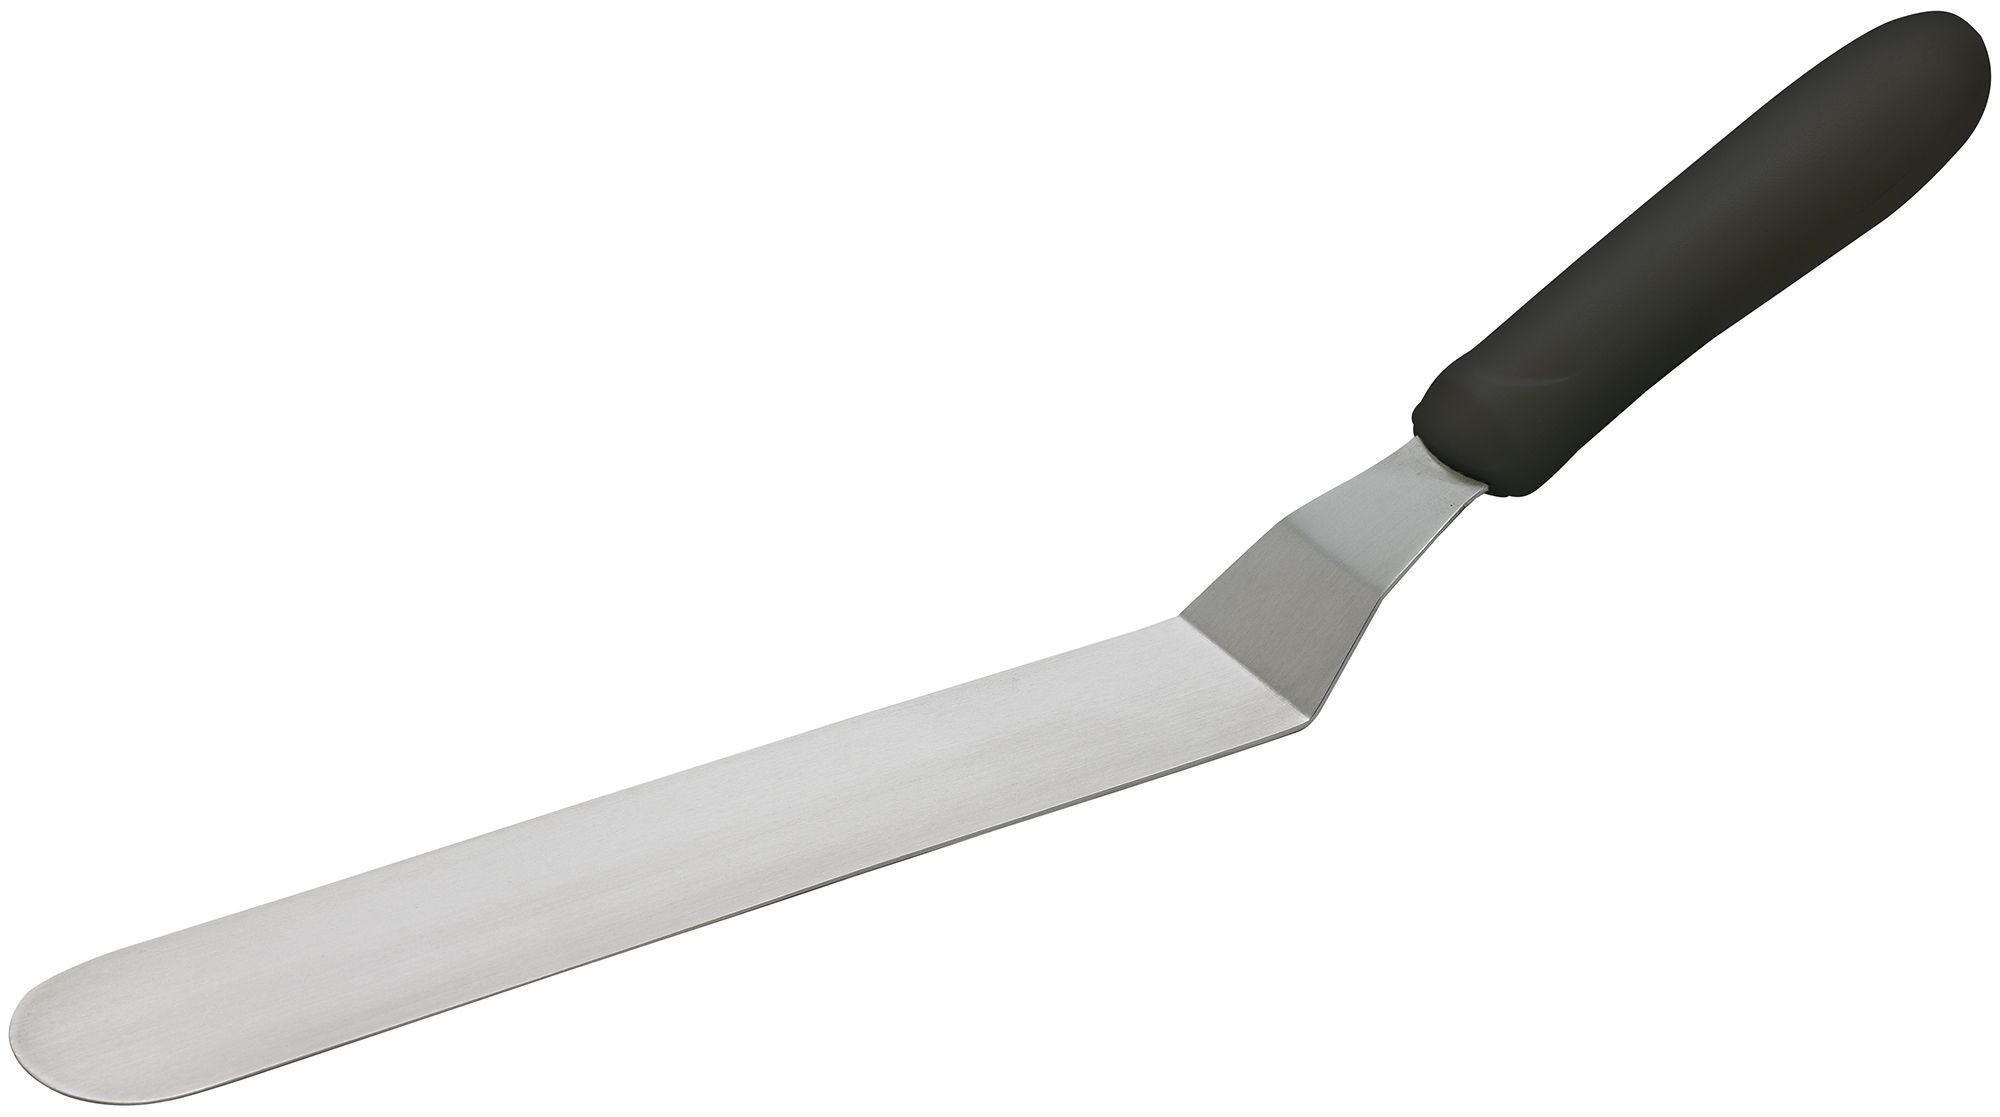 Winco TKPO-9 Offset Spatula 9-1/2" Blade, Black Polypropylene Handle